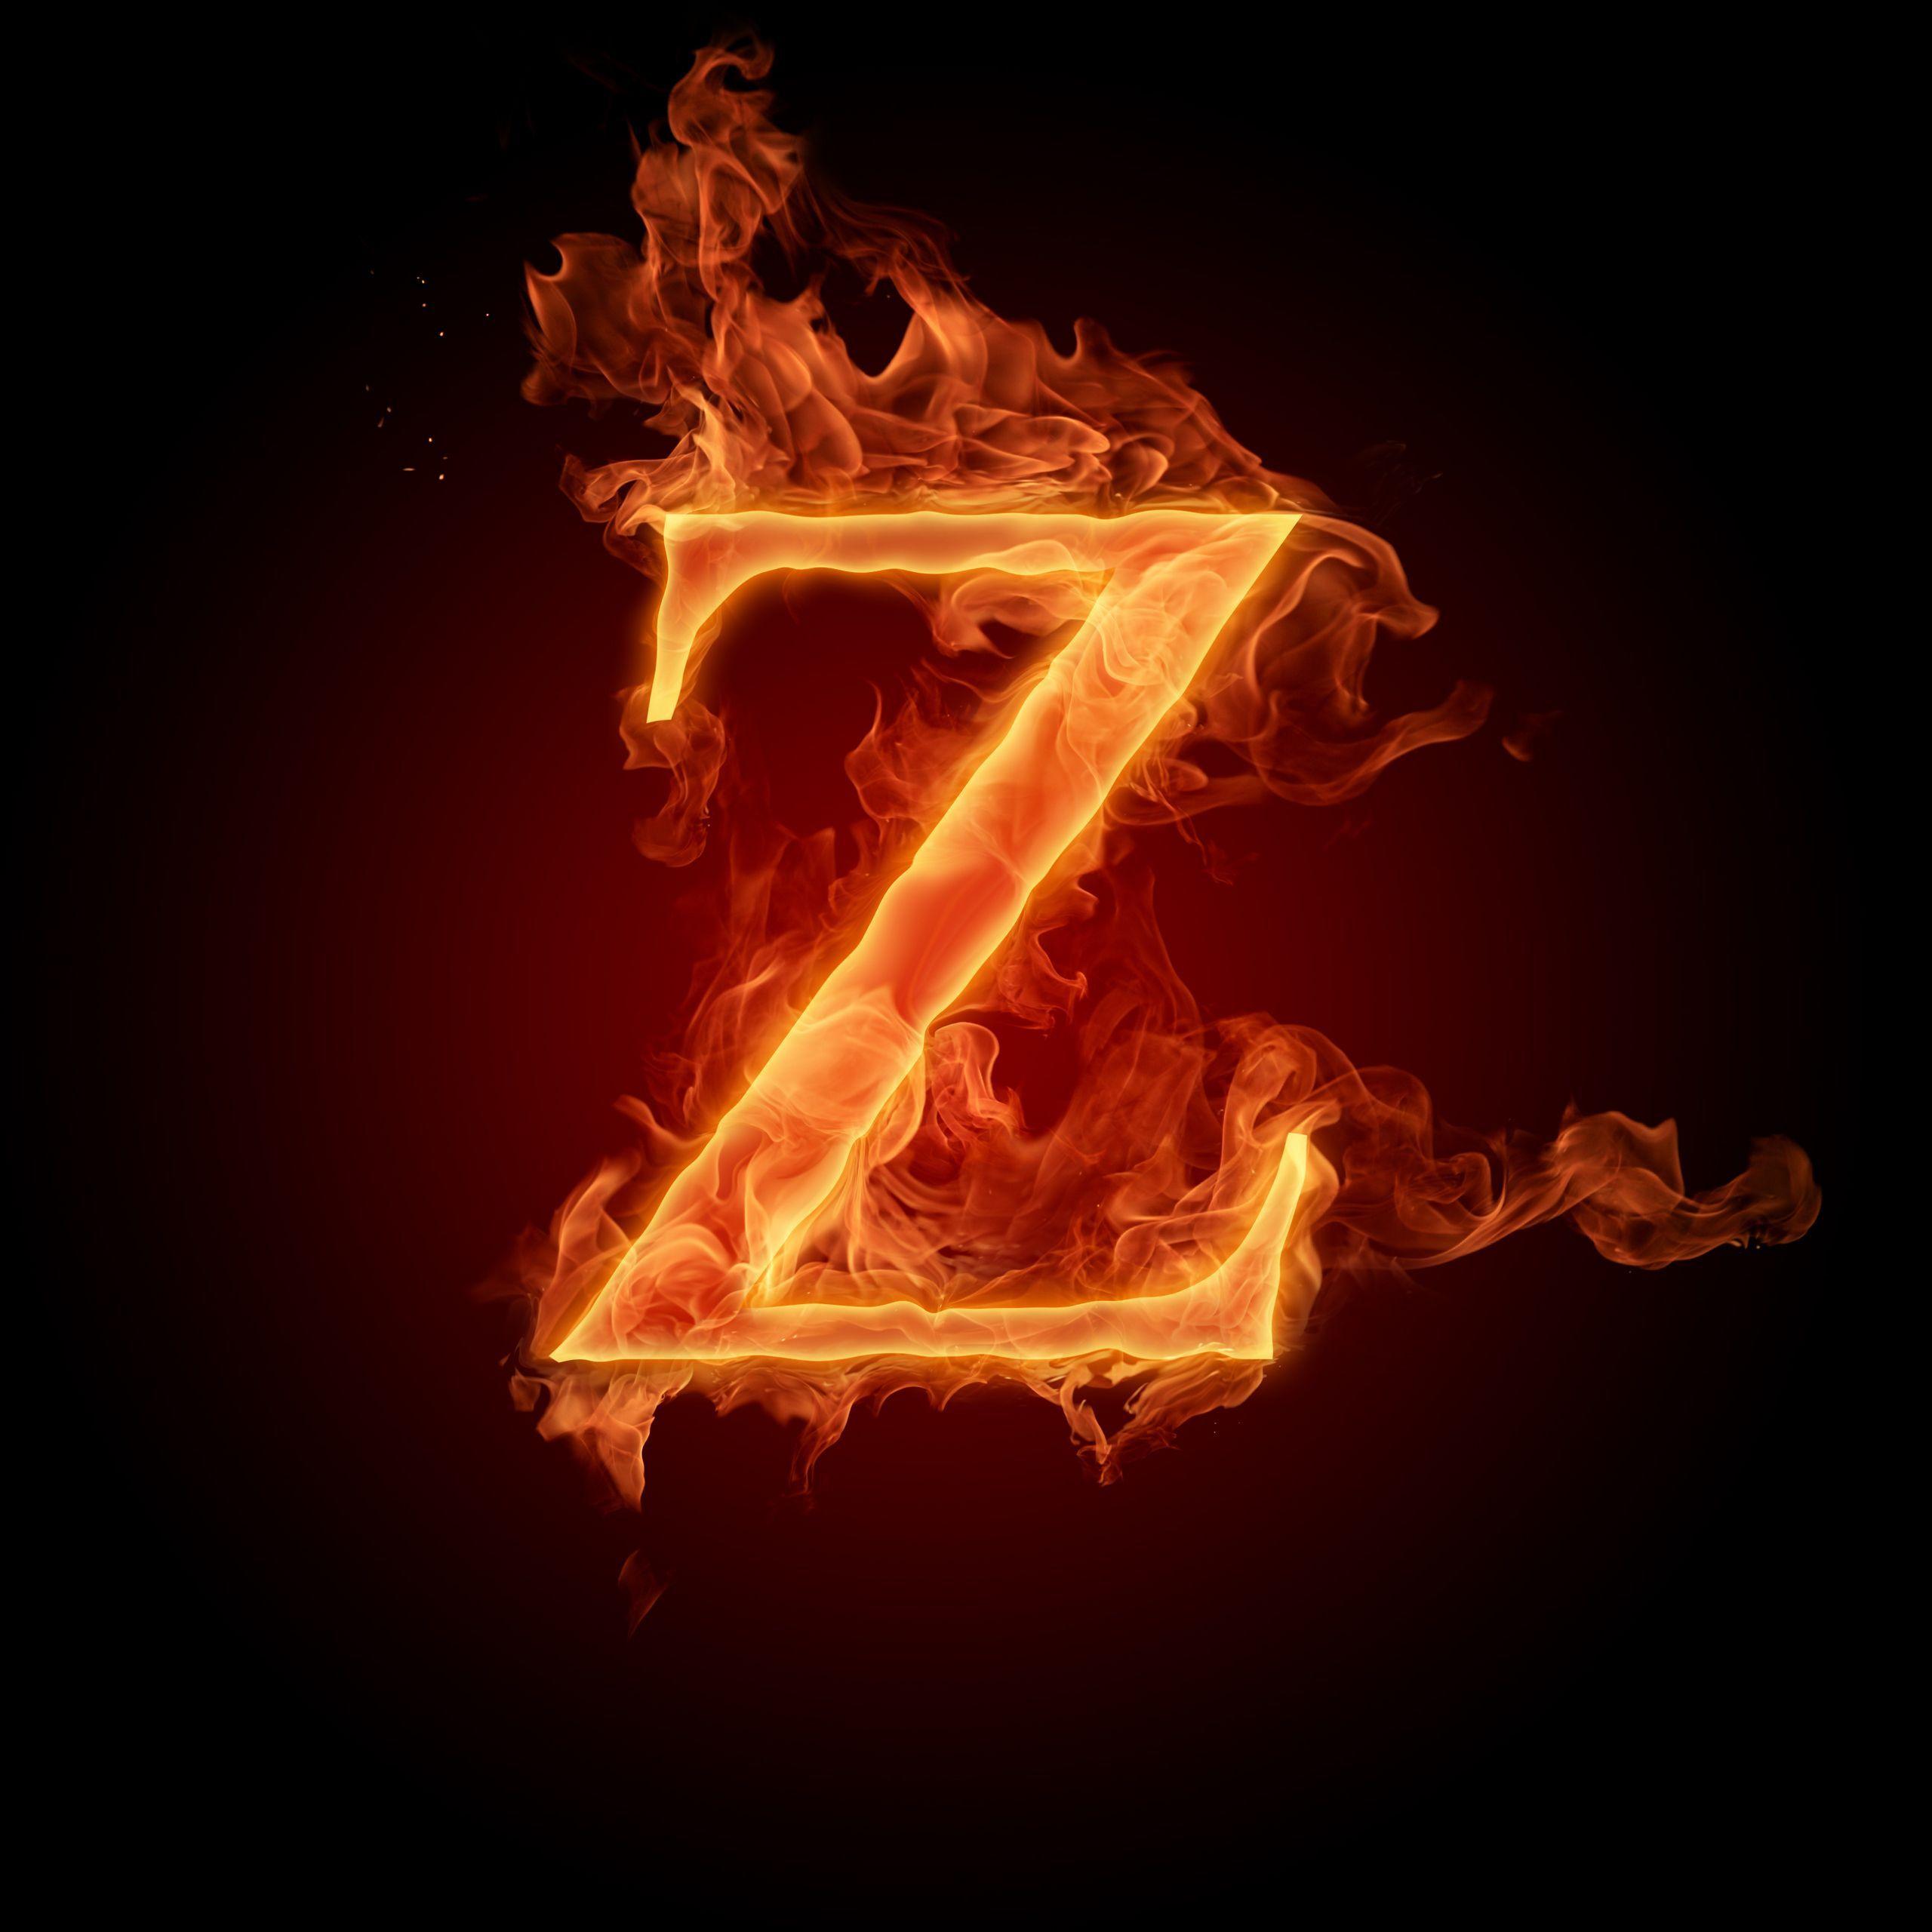 Z English Alphabet 3D Wallpaper The Letter Z Image The Letter Z HD